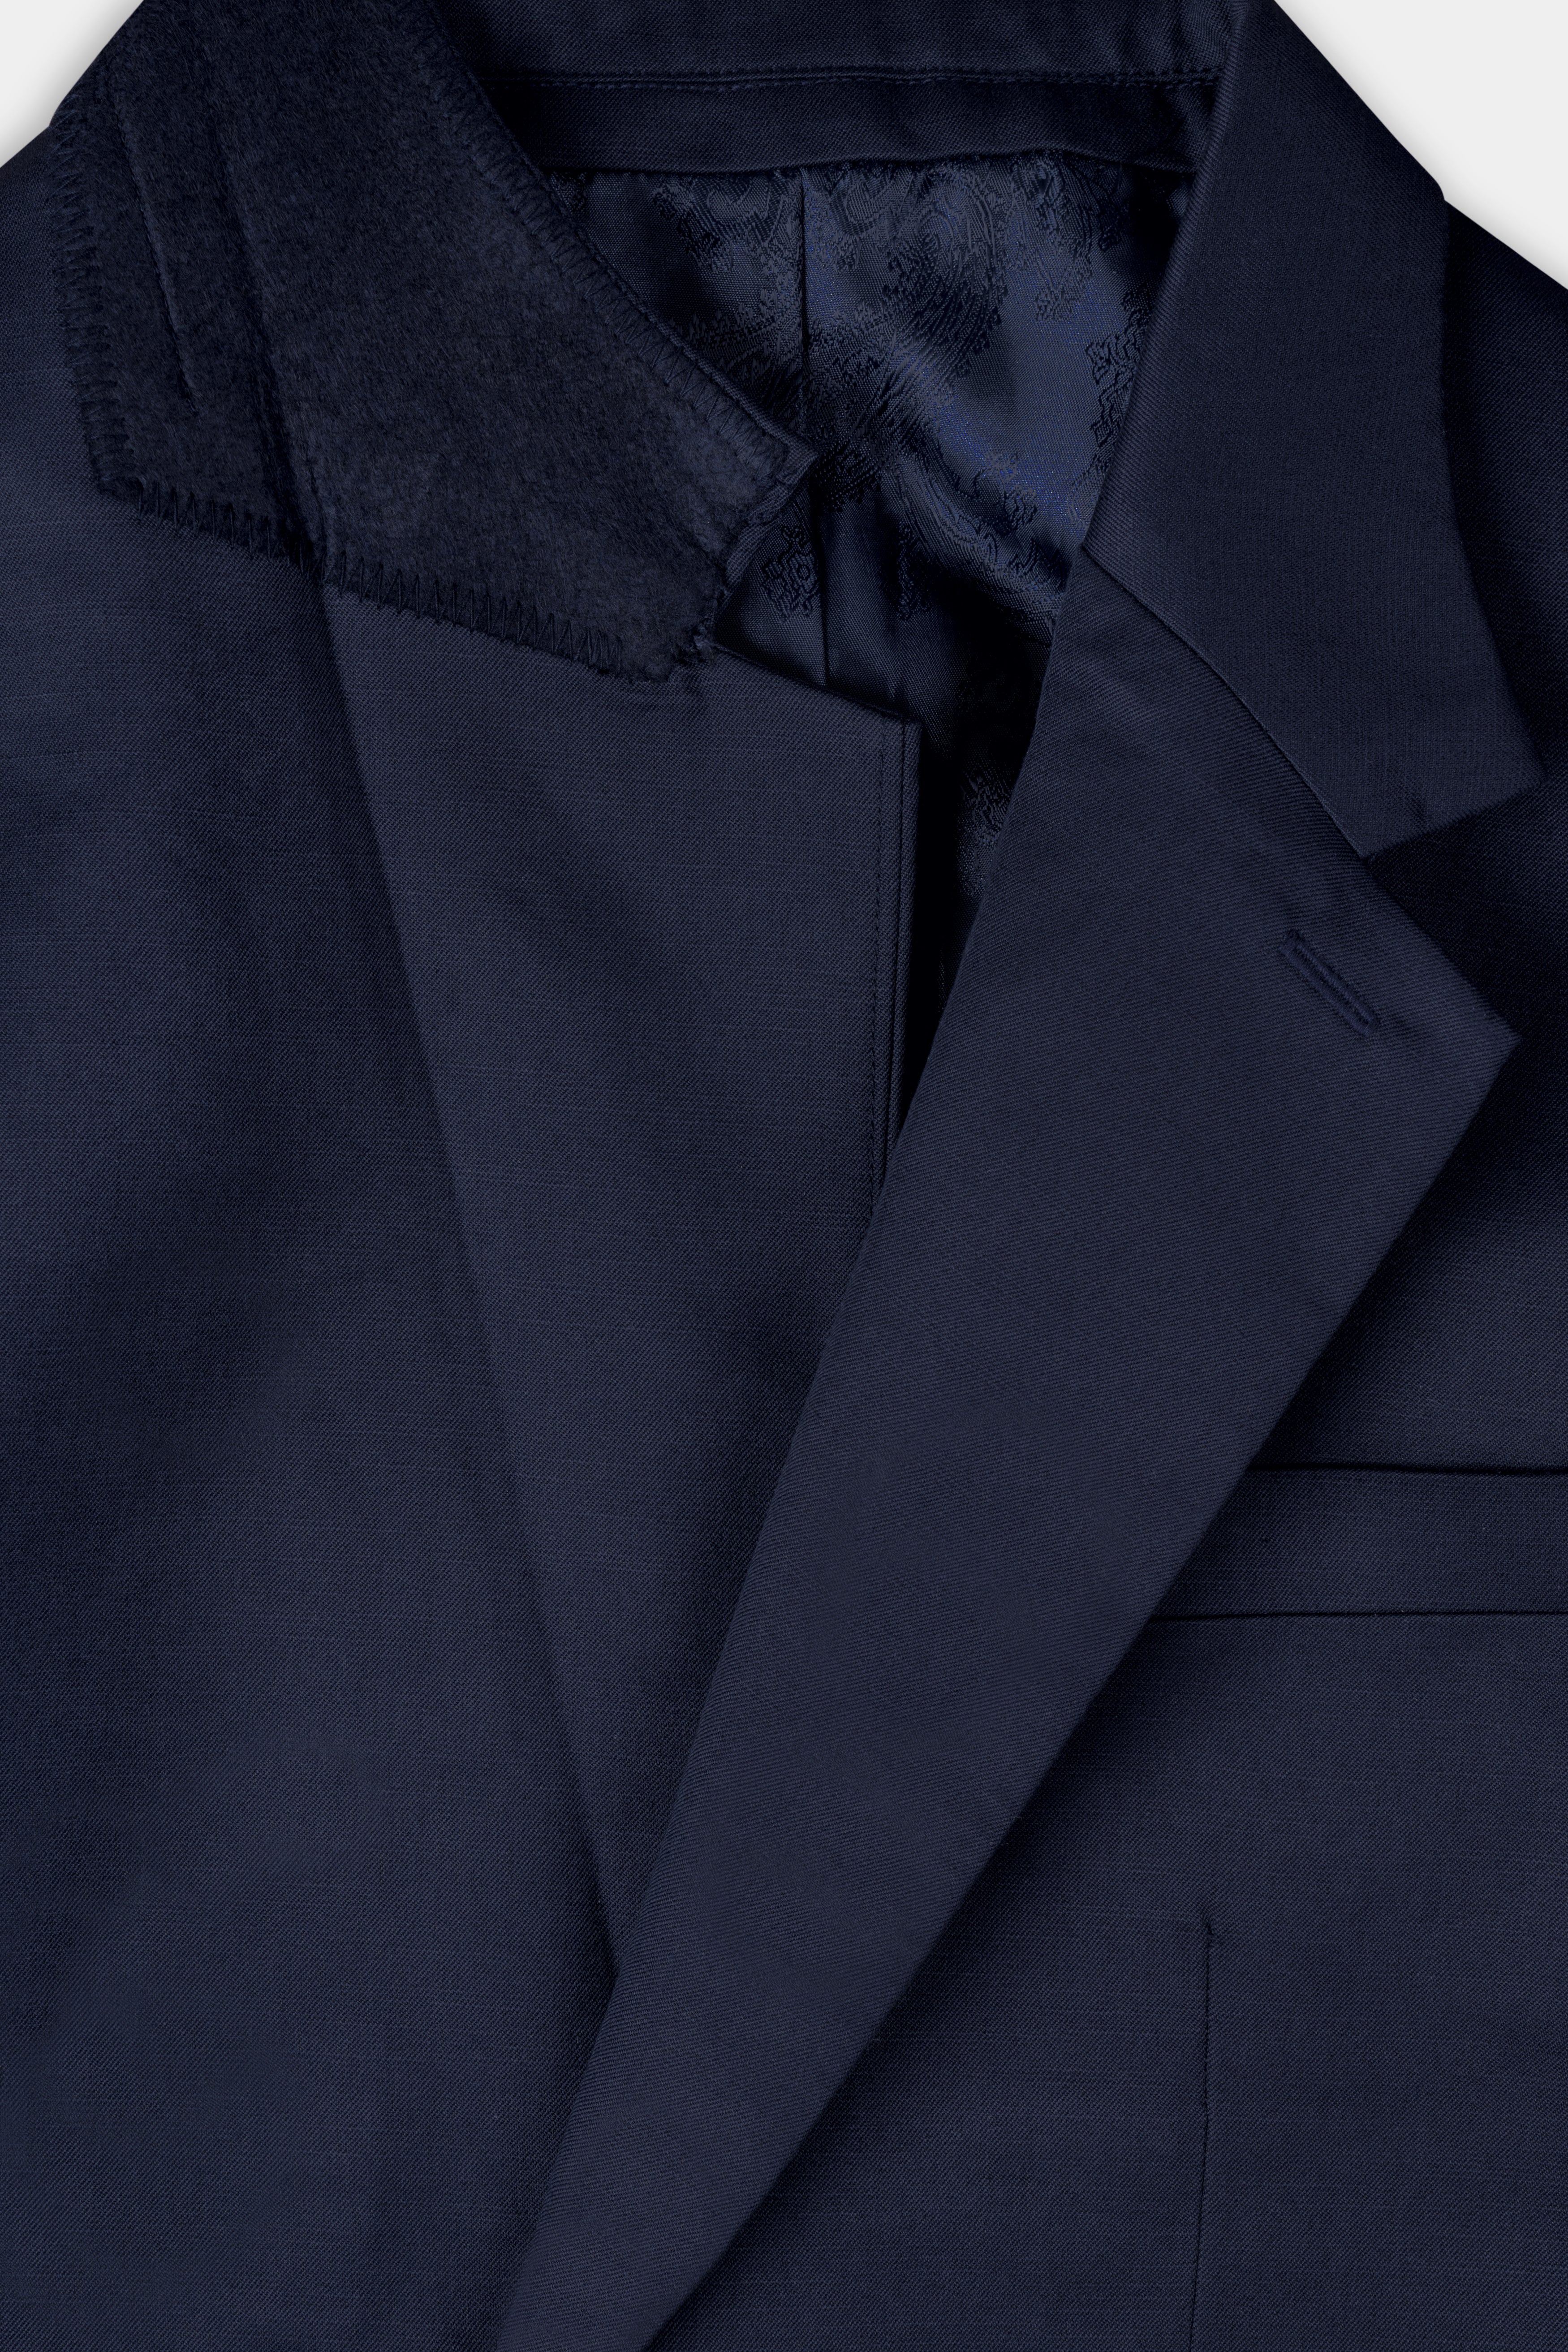 Tealish Blue Hand Painted Subtle Sheen Wool Blend Suit